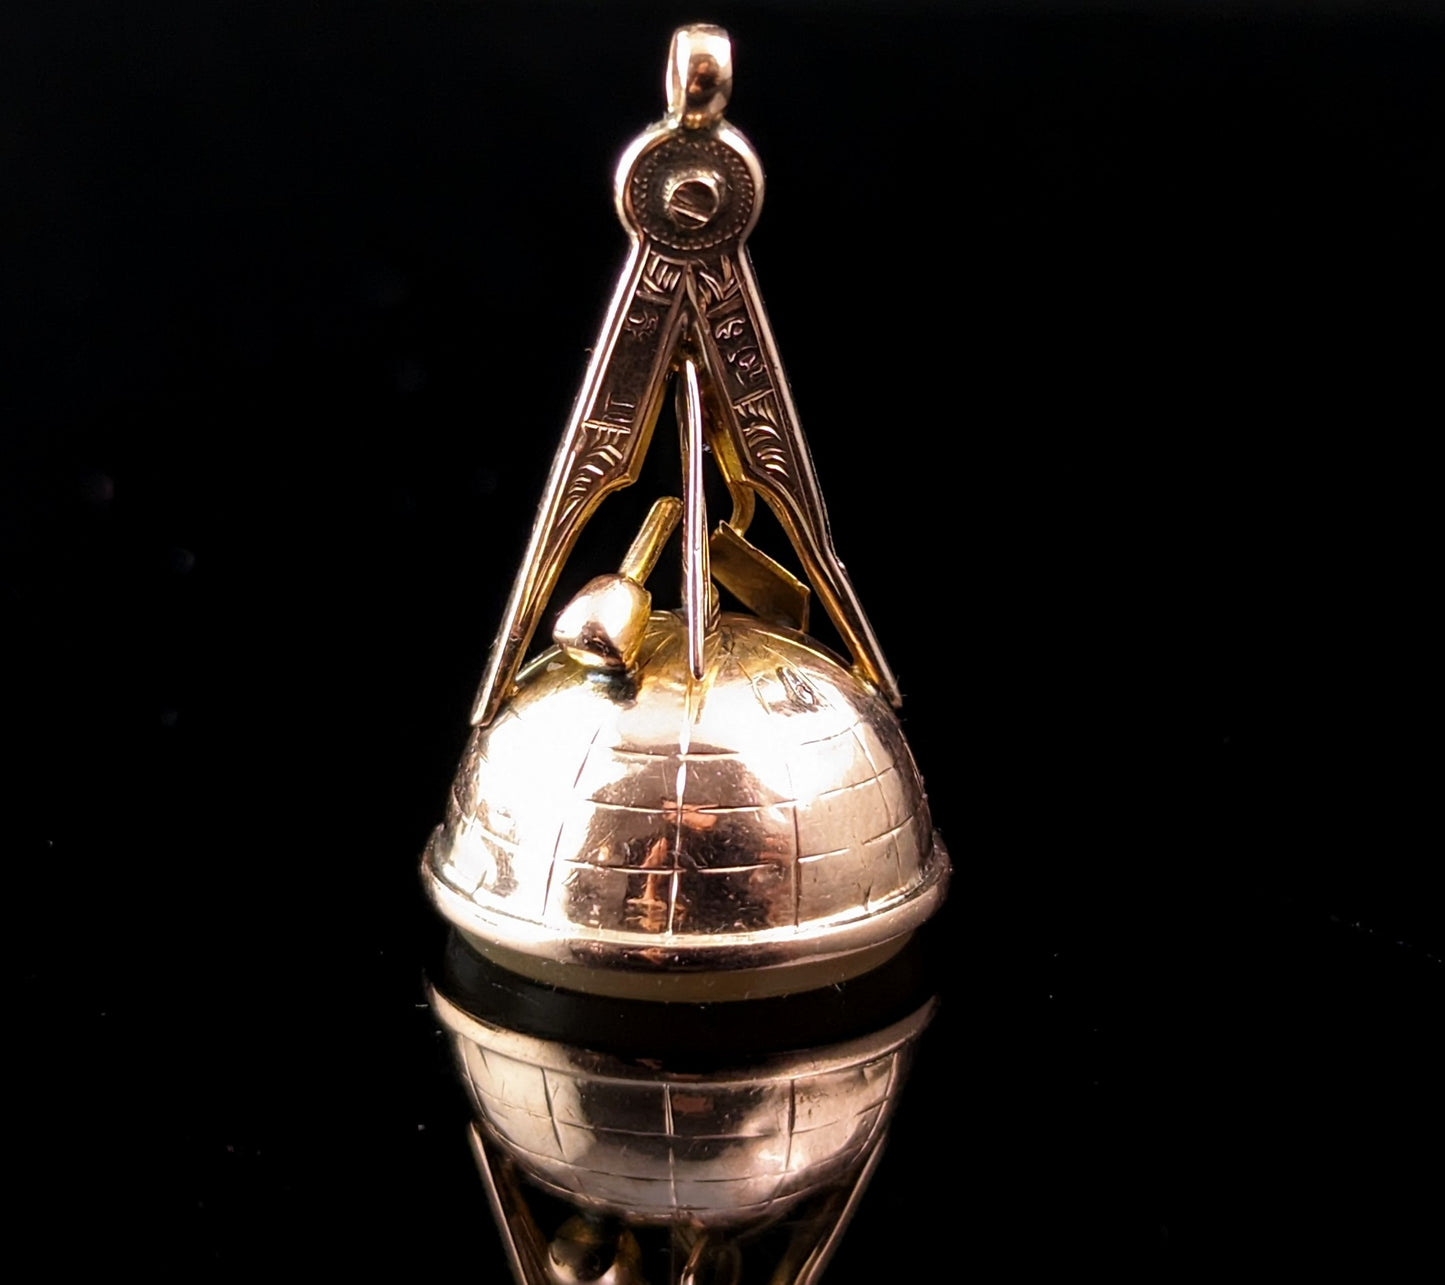 Antique Masonic seal fob pendant, 9ct gold, chalcedony